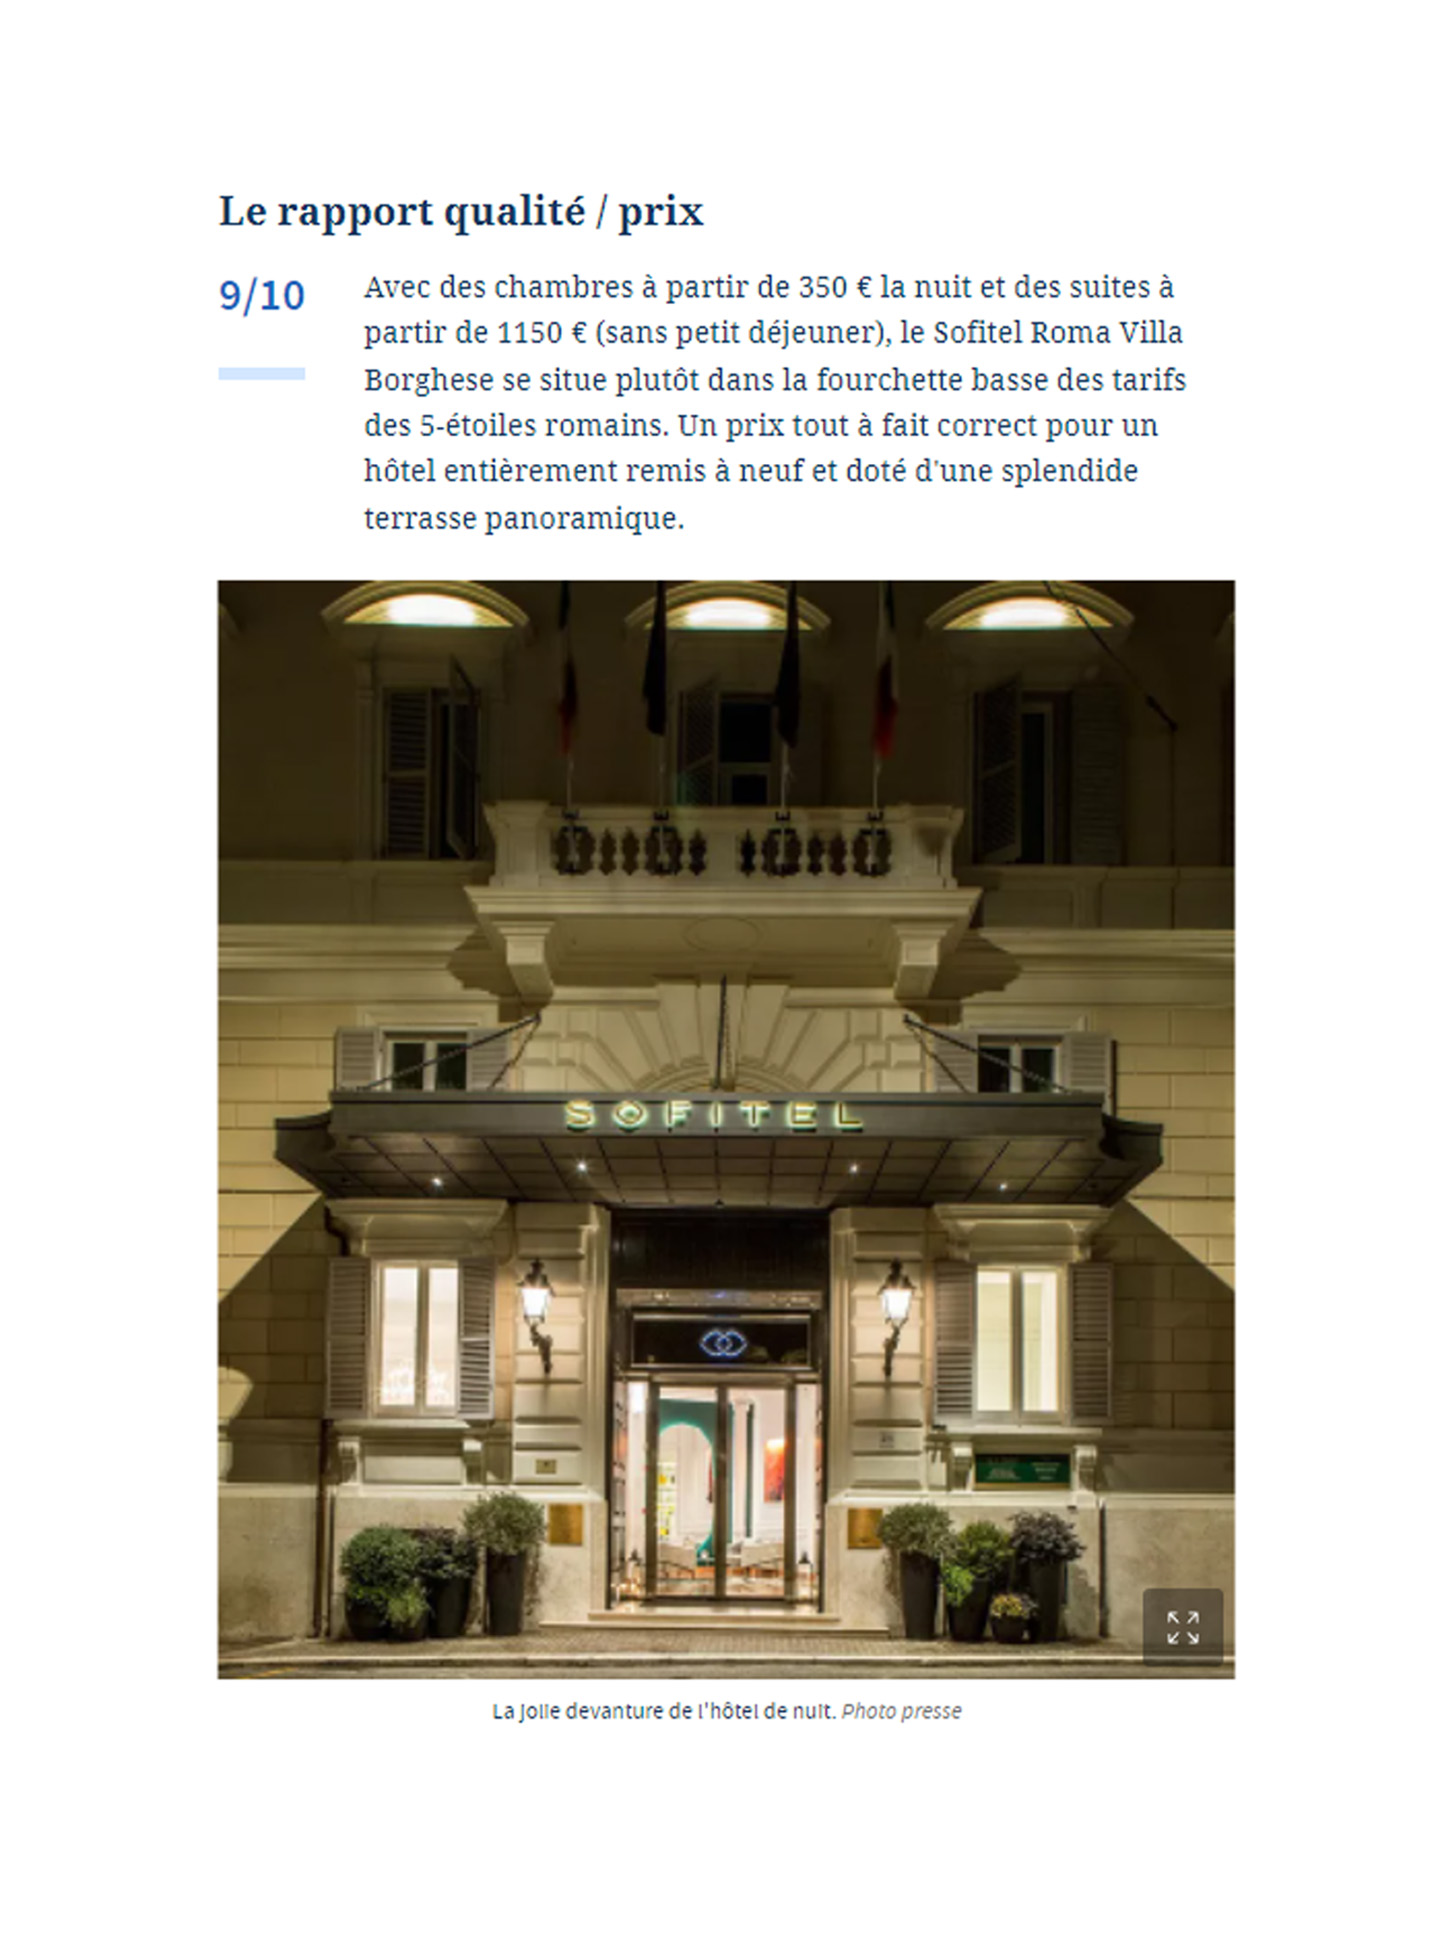 Article on the sofitel rome villa borghese in the figaro, hotel renovated and decorated by the interior design studio jean-philippe nuel